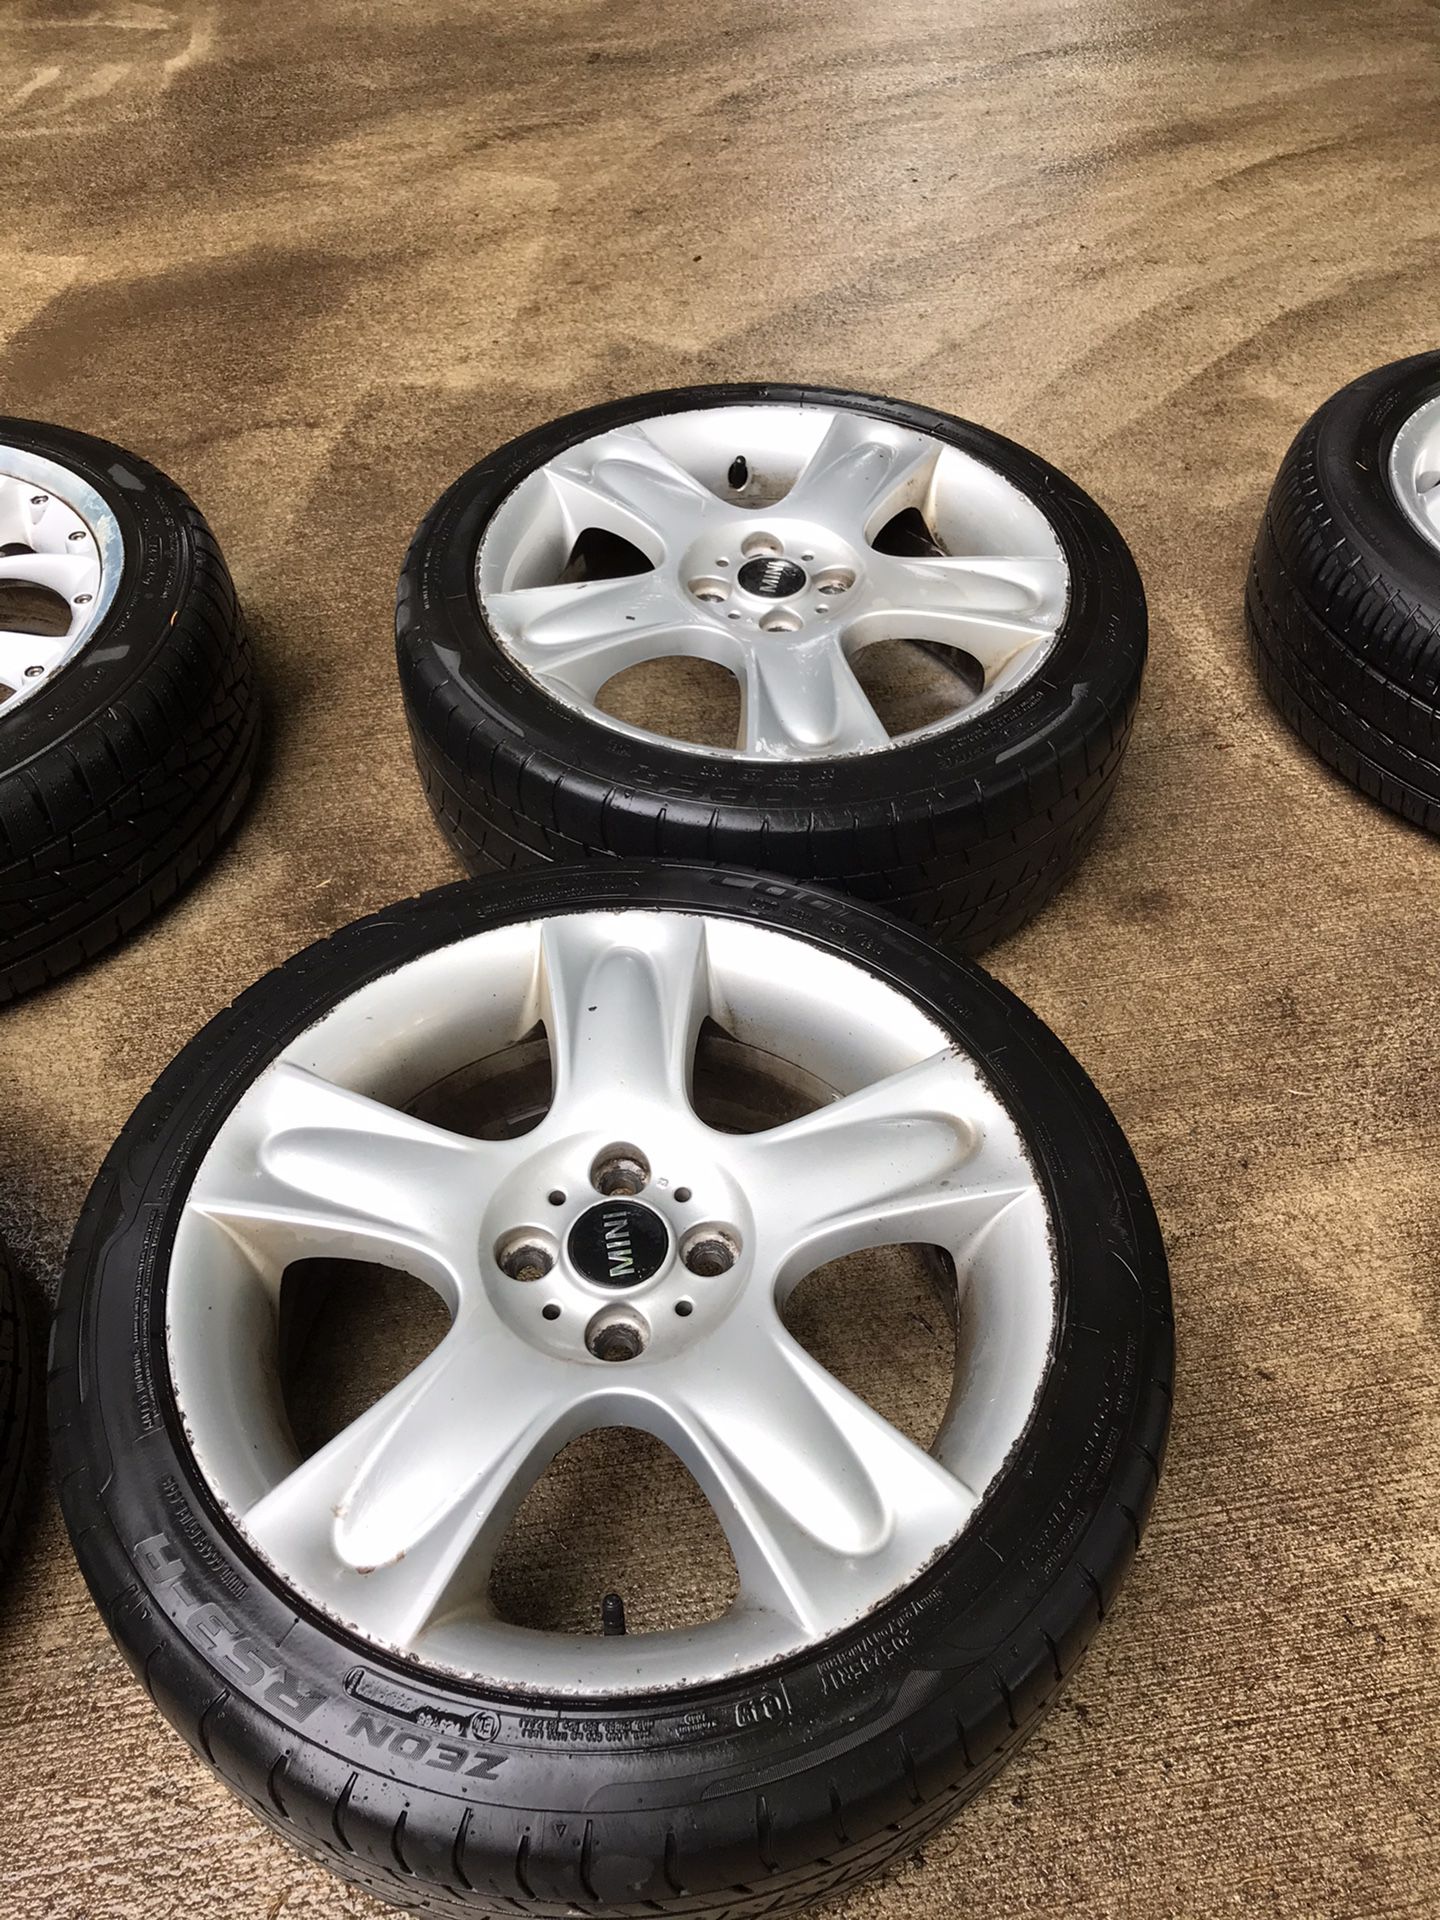 X4 Mini Cooper 17” wheels and tires.